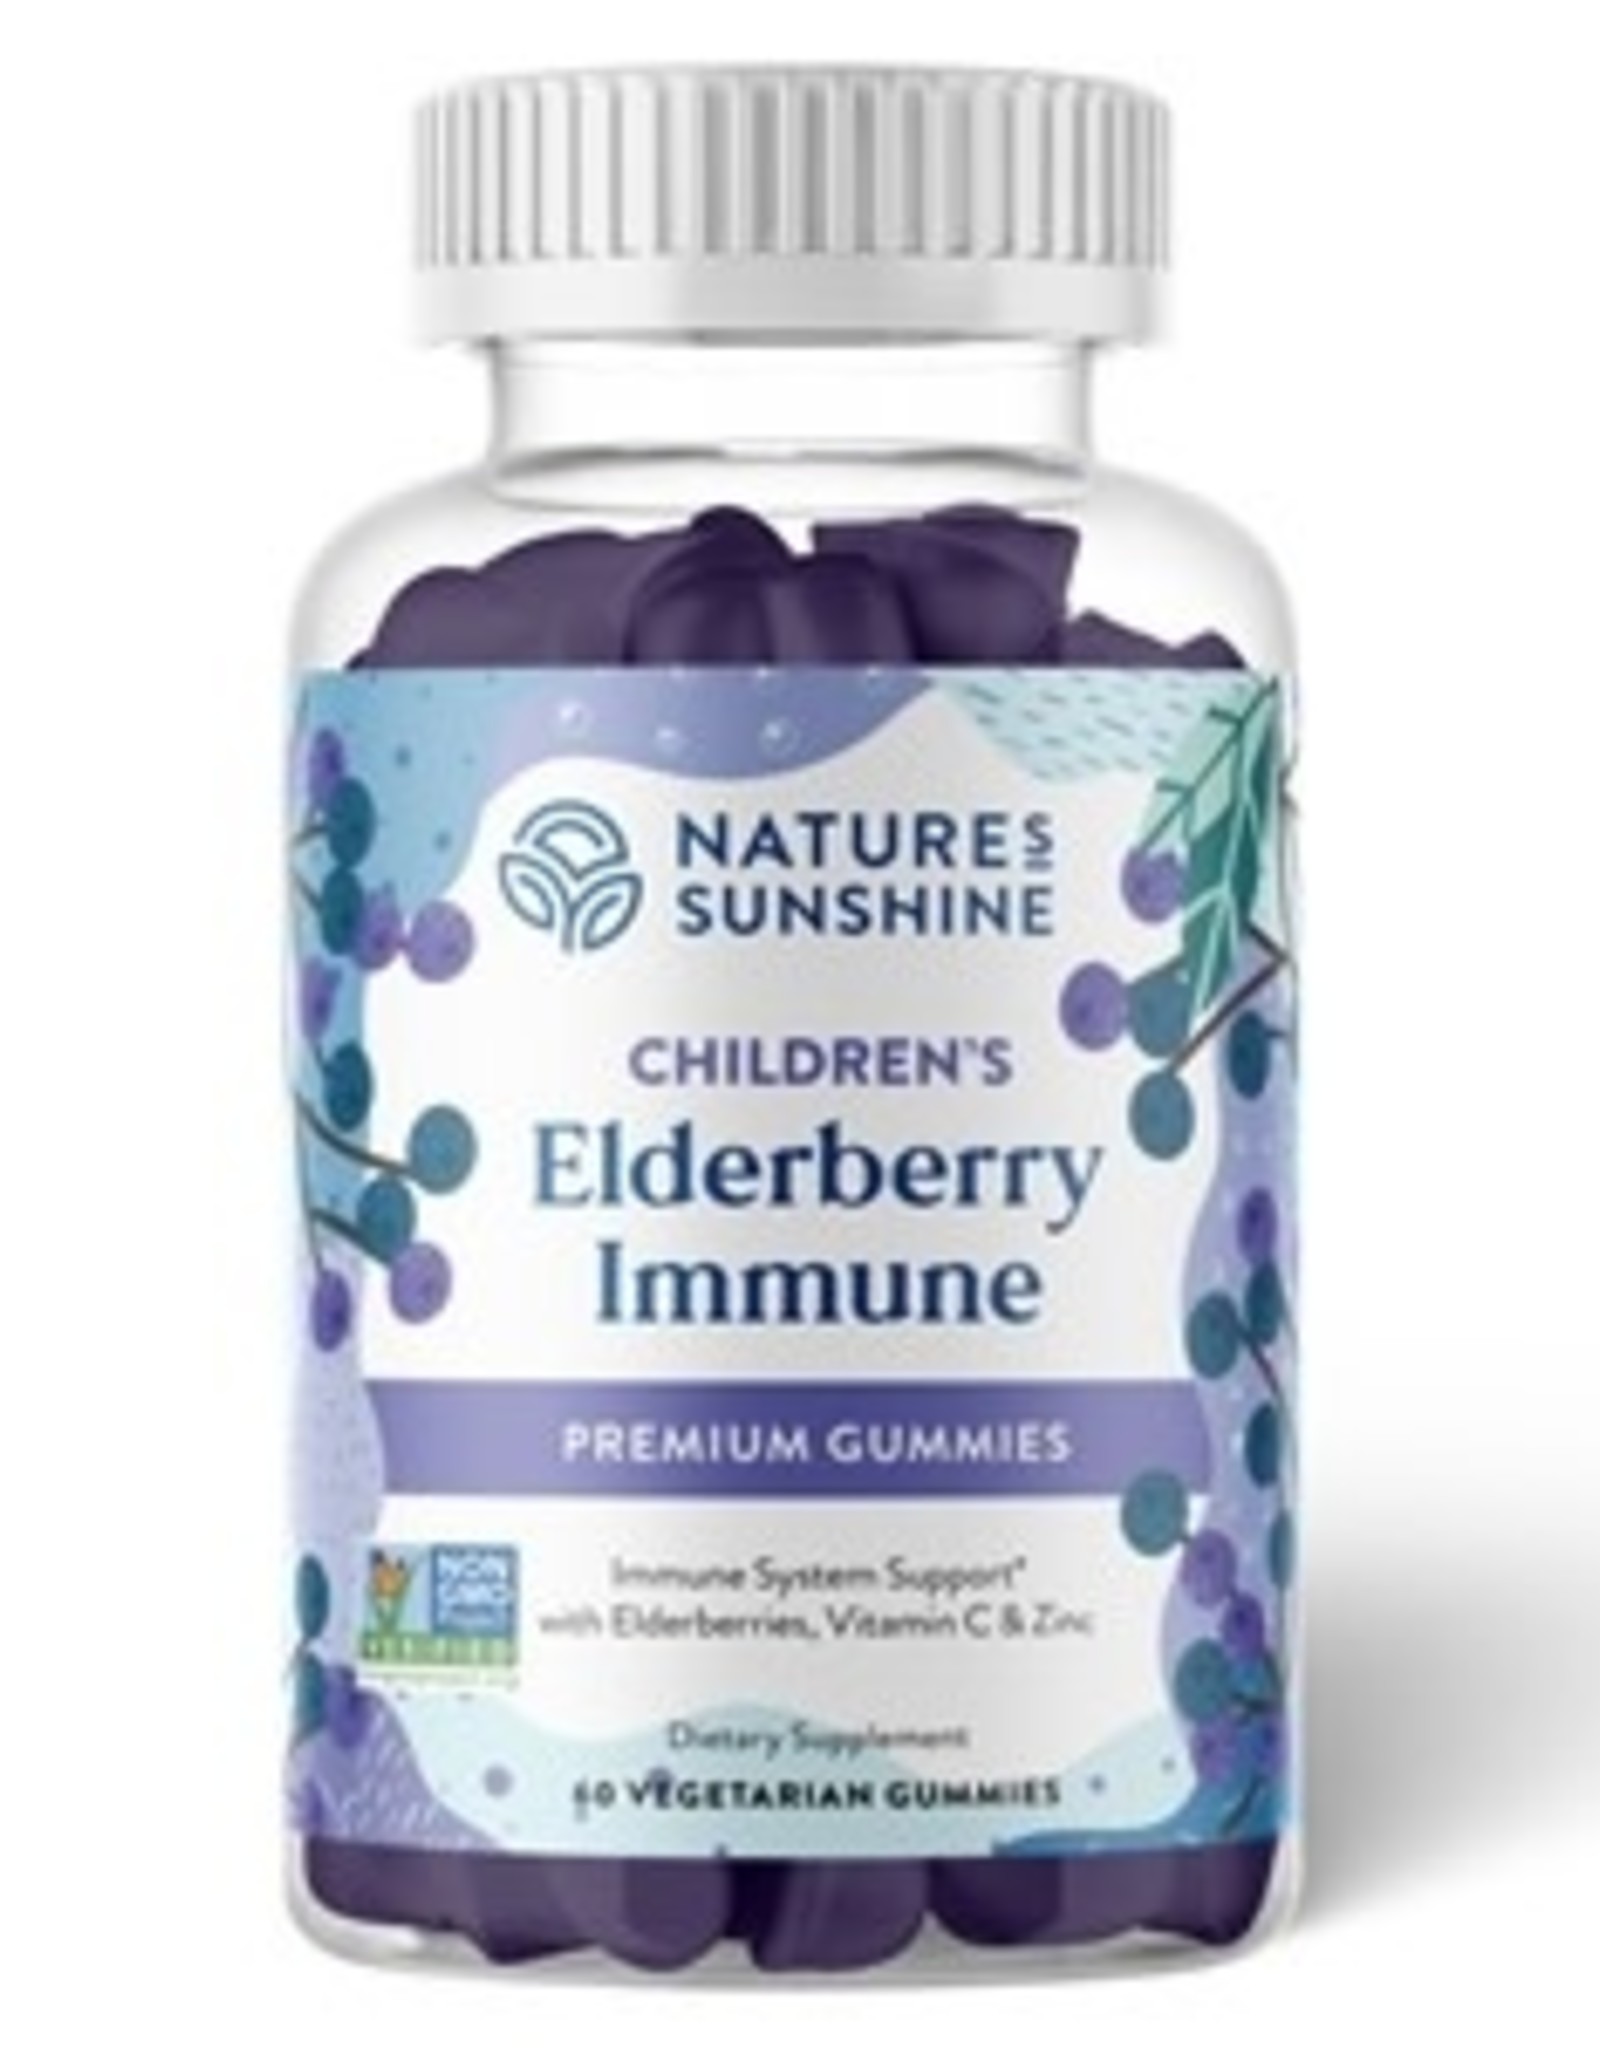 Nature's Sunshine Children’s Elderberry Immune—NEW (60 veg. gummies)